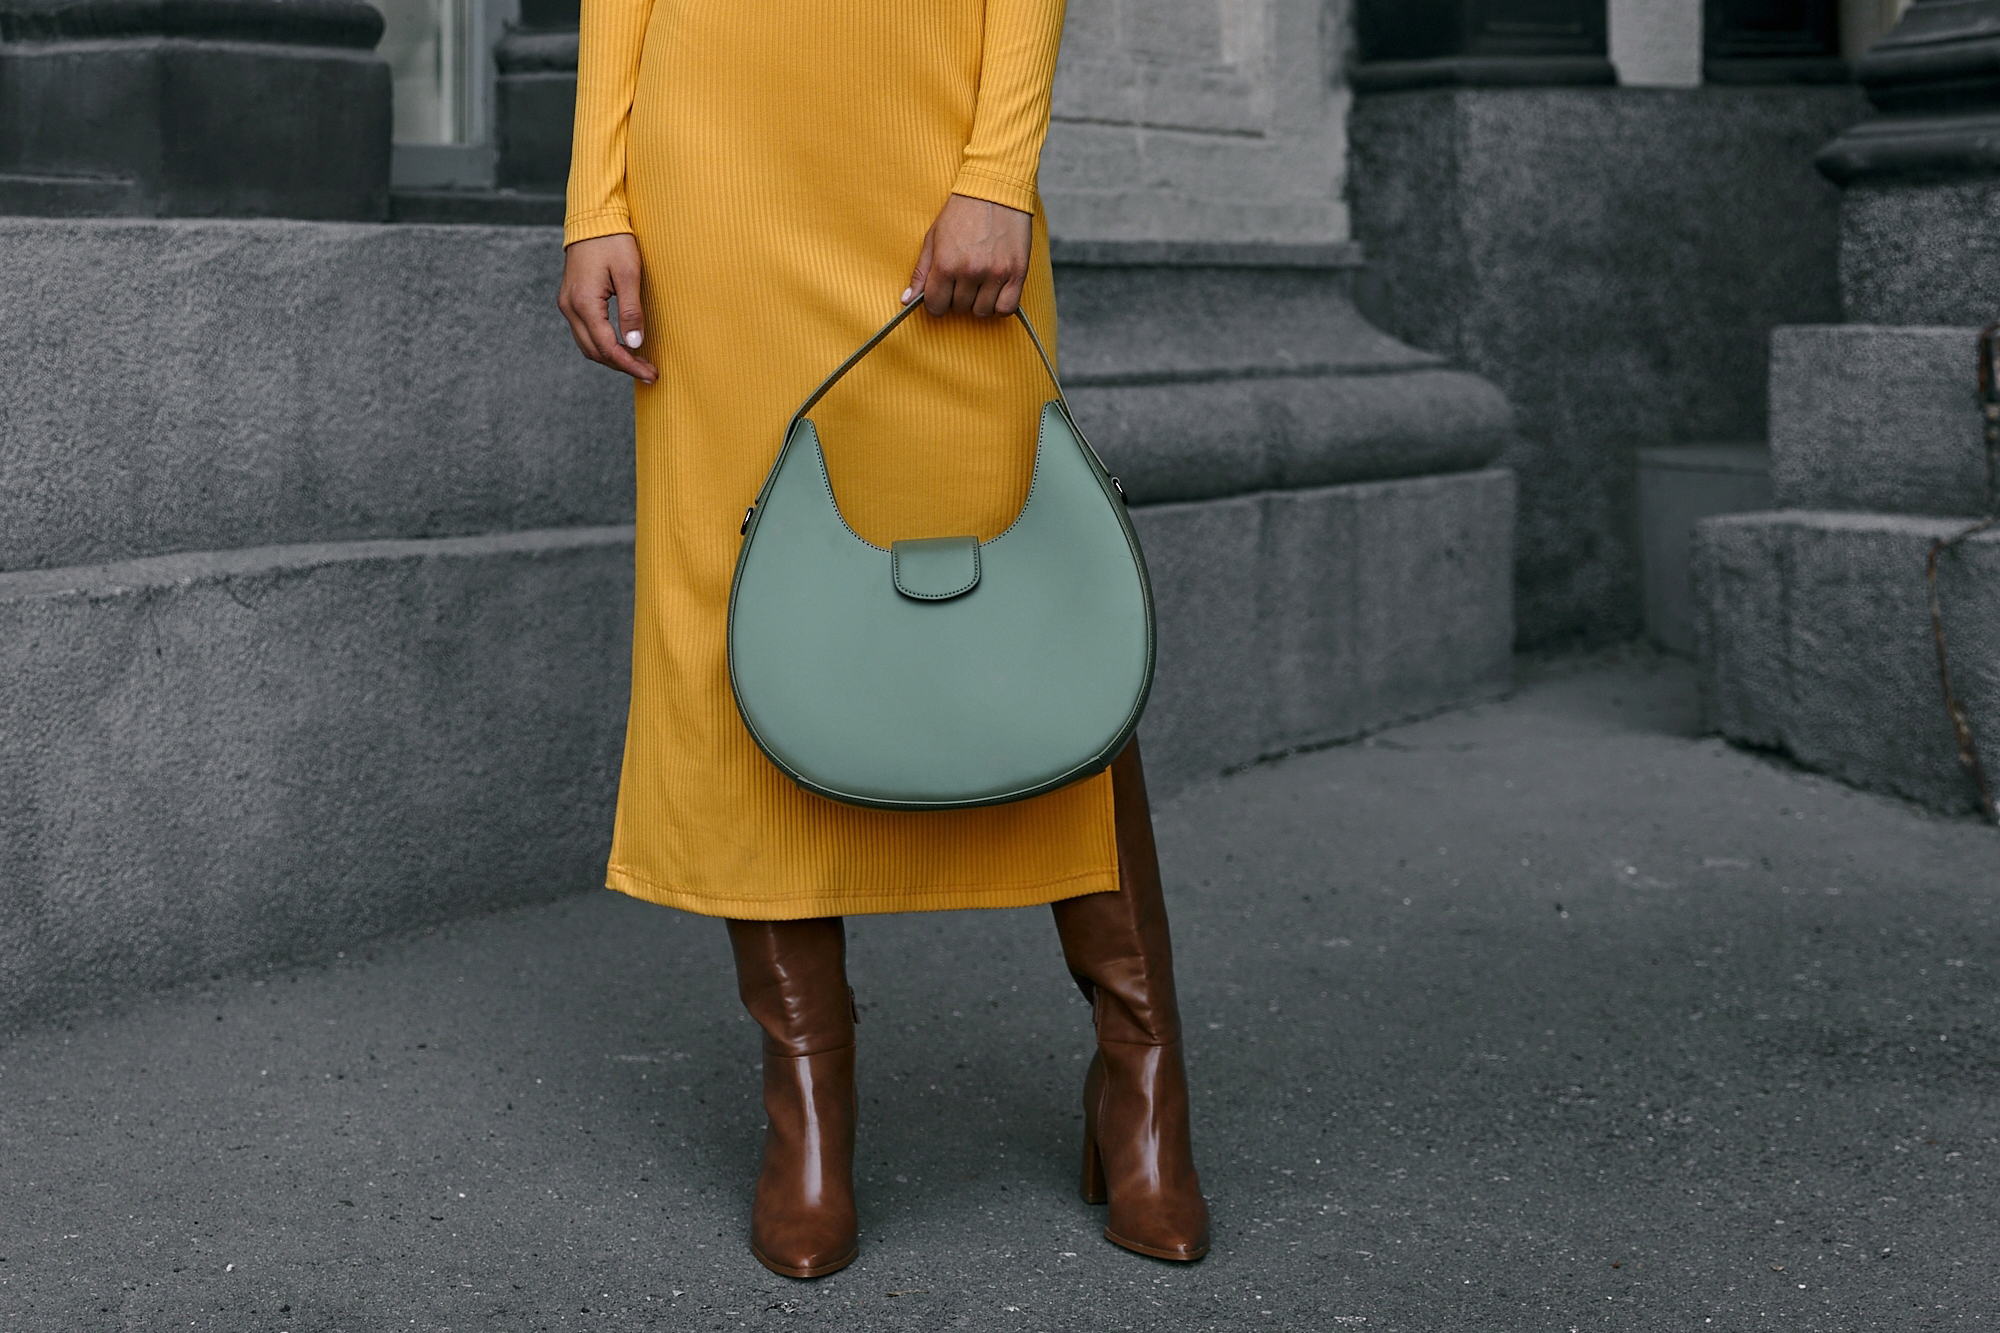 The Sole Club Mini Jelly Purse Flap Handbag stylish trendy